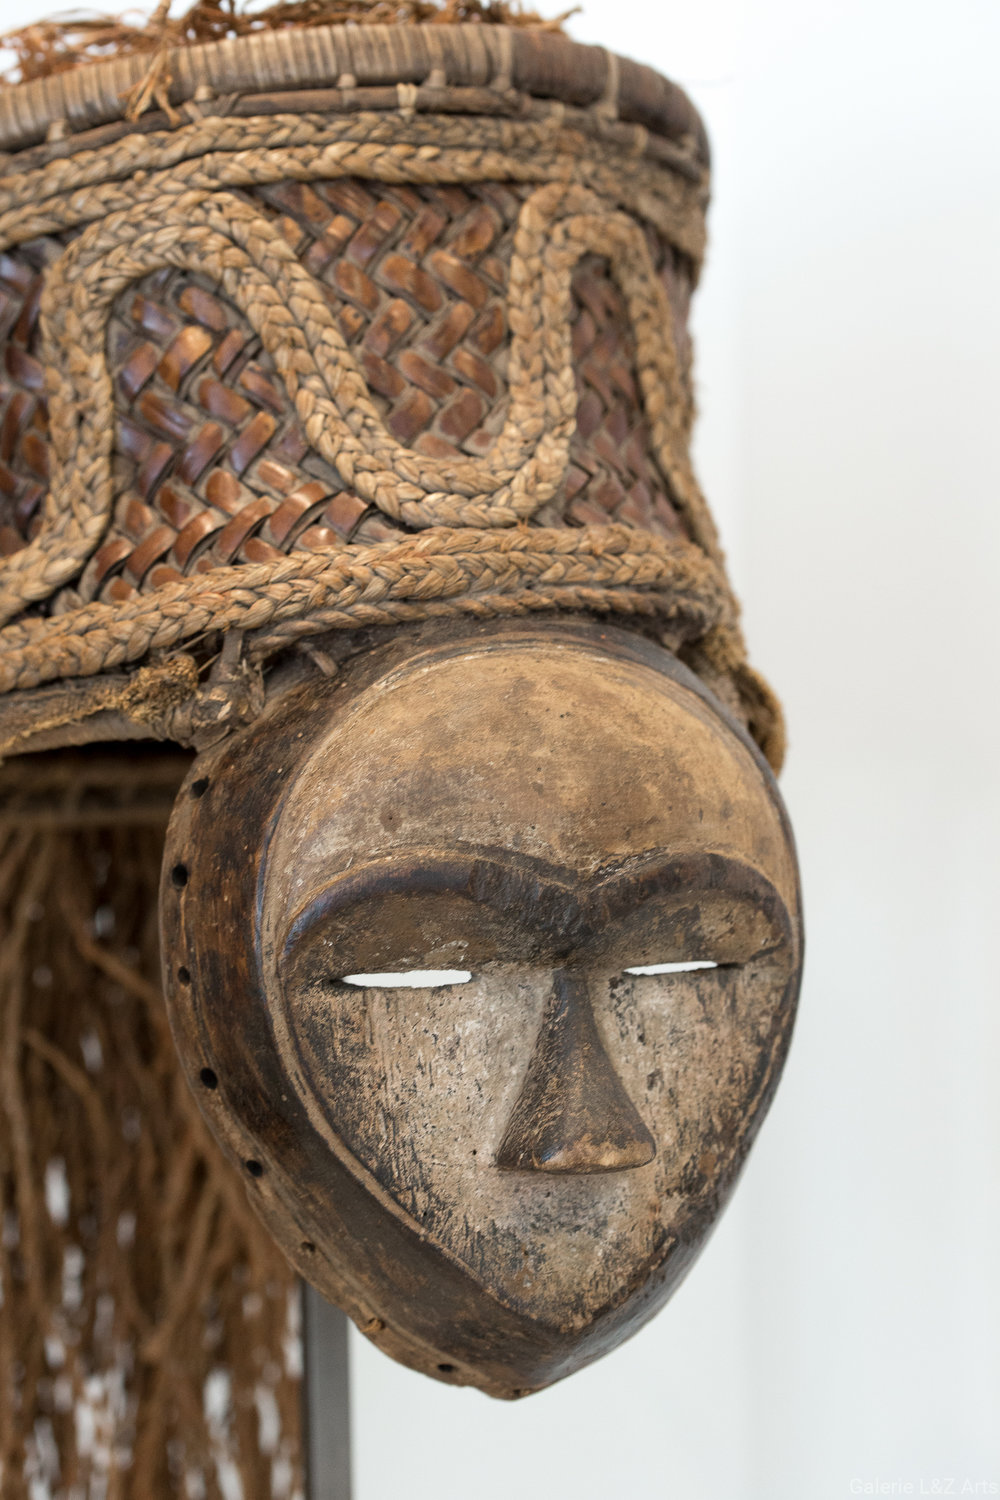 tribal-art-oostende-ostende-exposition-galerie-lz-art-africain-belgique-9.jpg